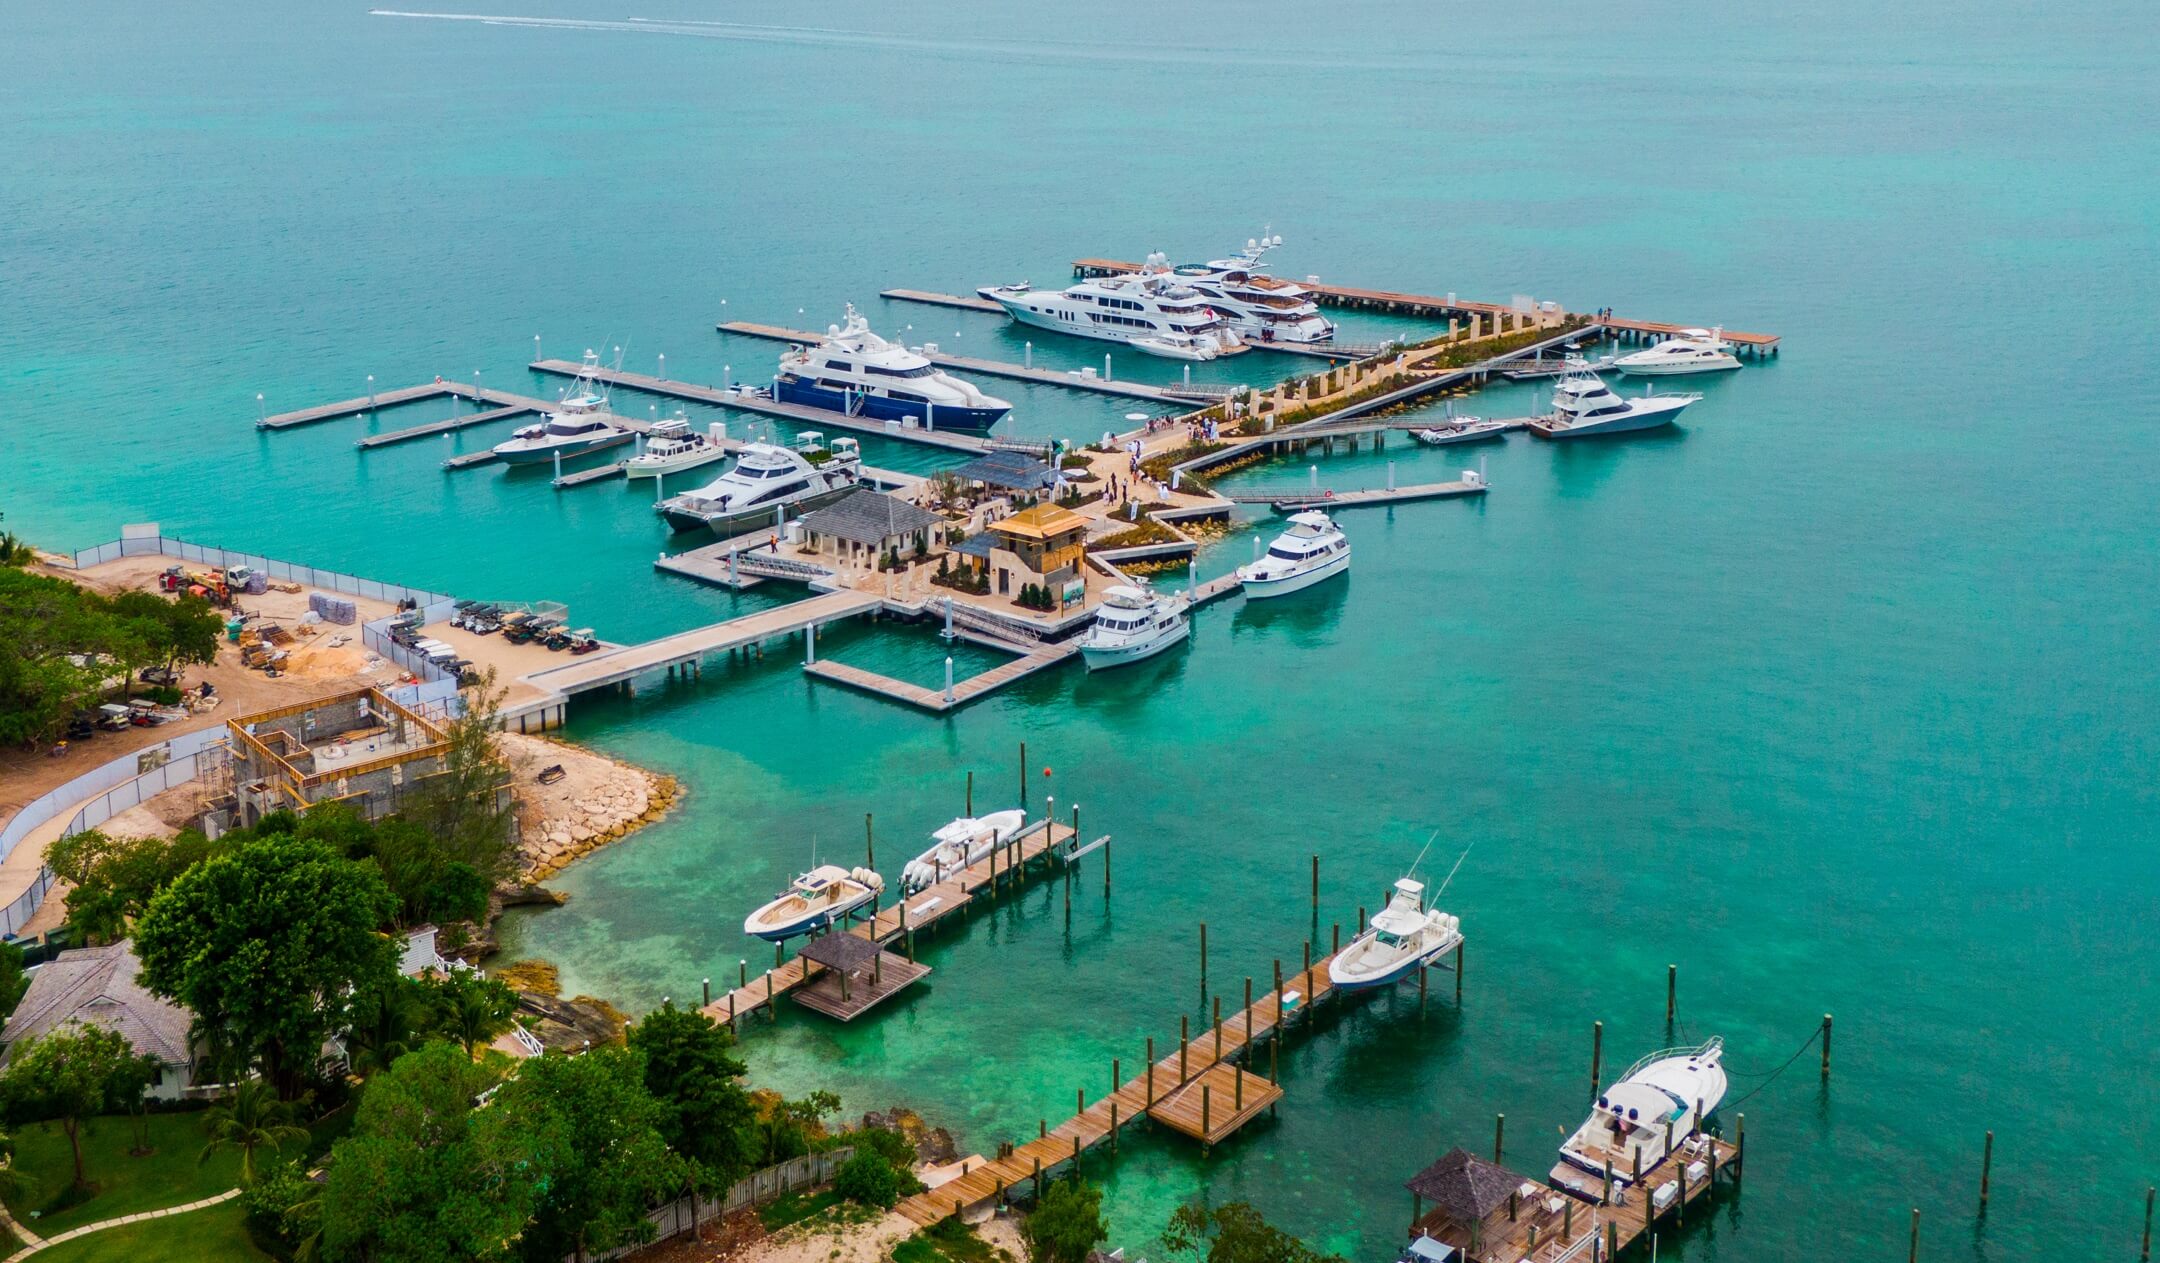 Turnkey marina with yachts moored in the Bahamas